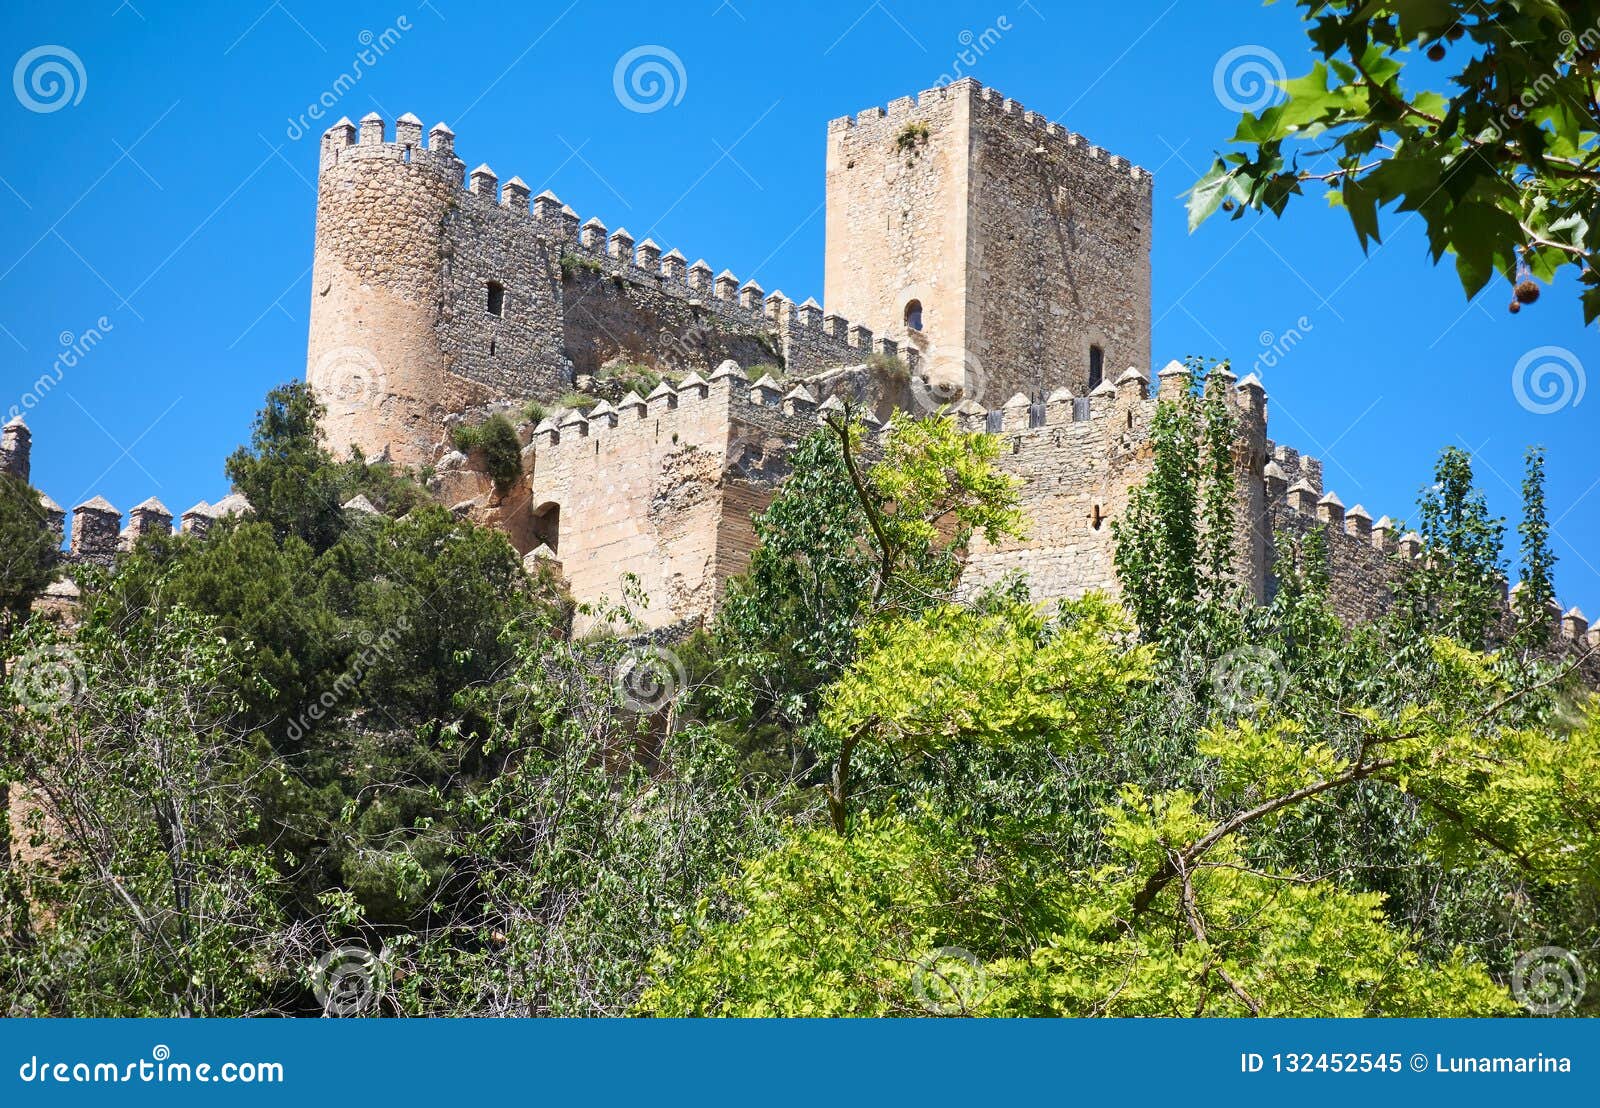 almansa castle in albacete of spain